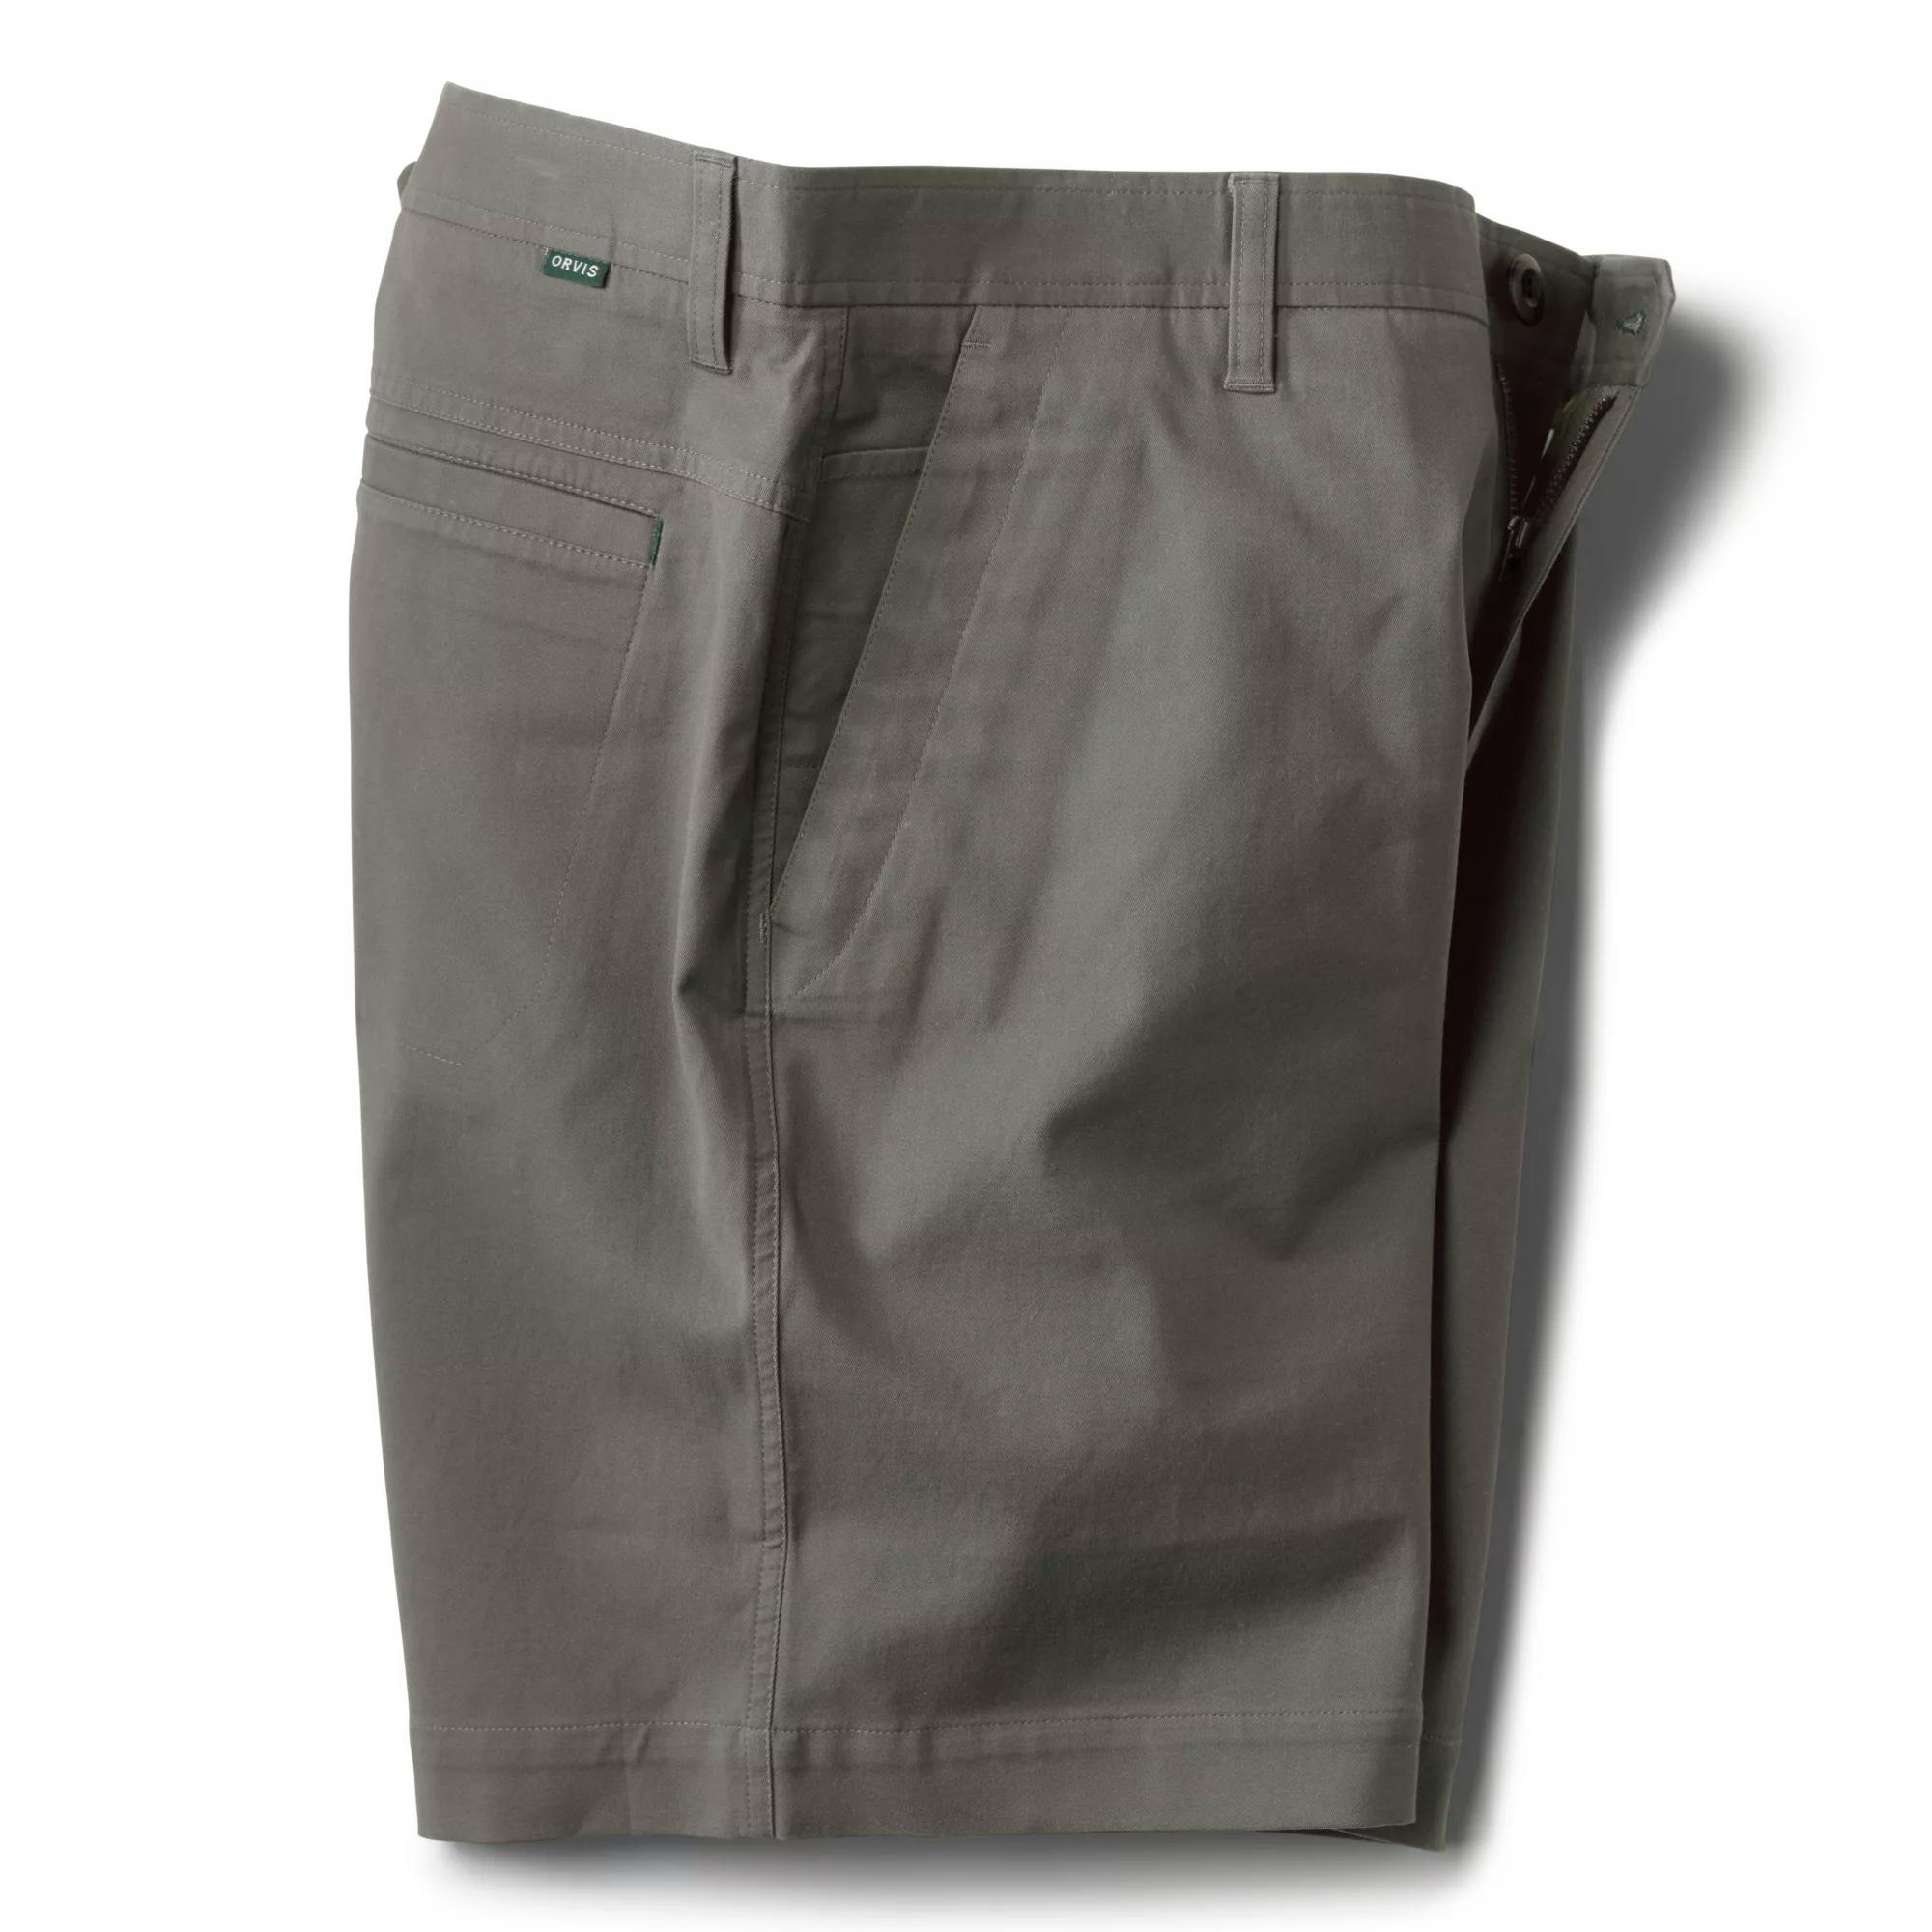 Orvis Men's Sandstone Shorts